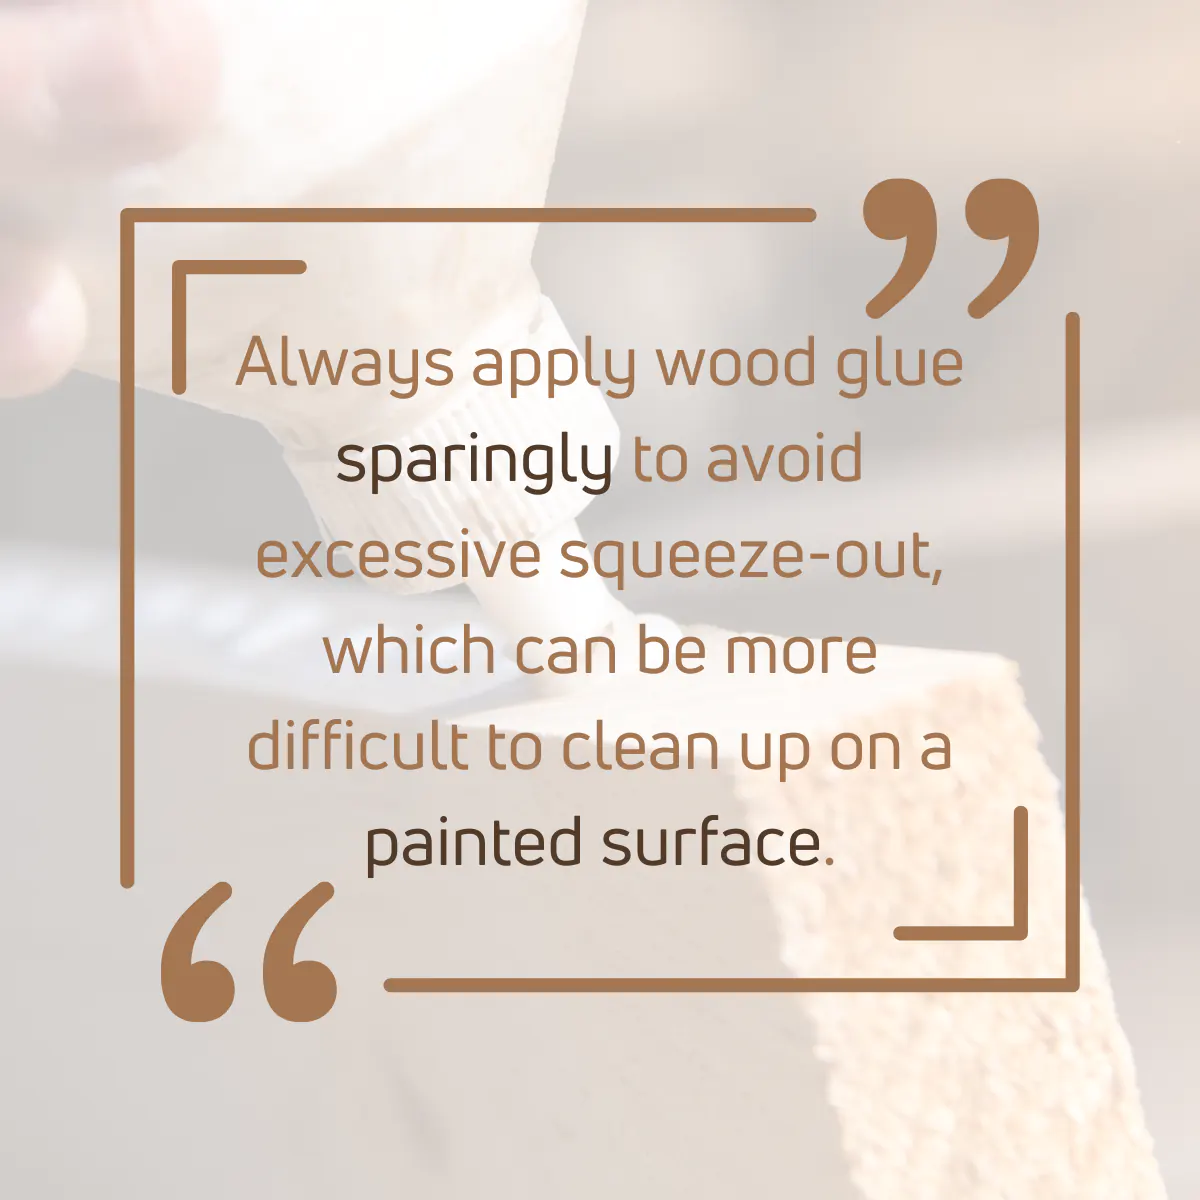 Tip to use wood glue on painted wood